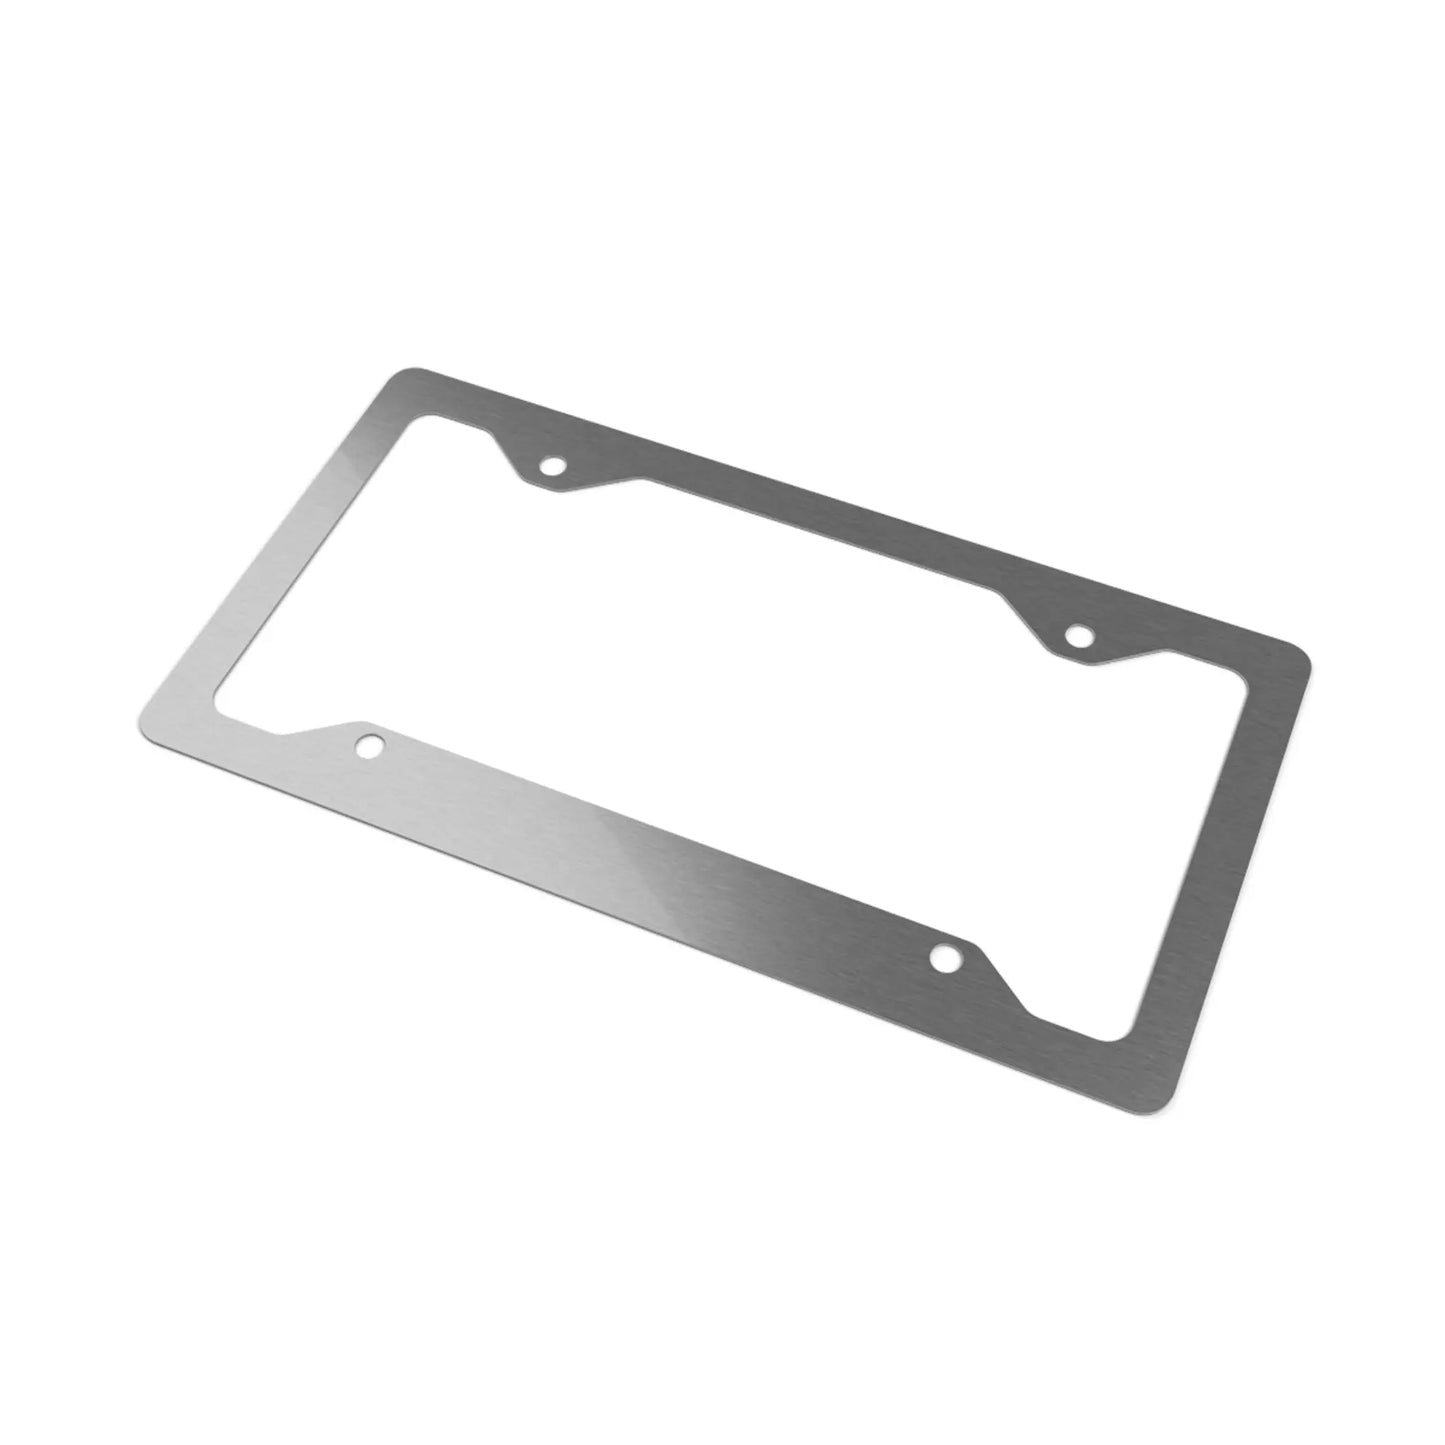 Custom College Metal License Plate Frame Printify